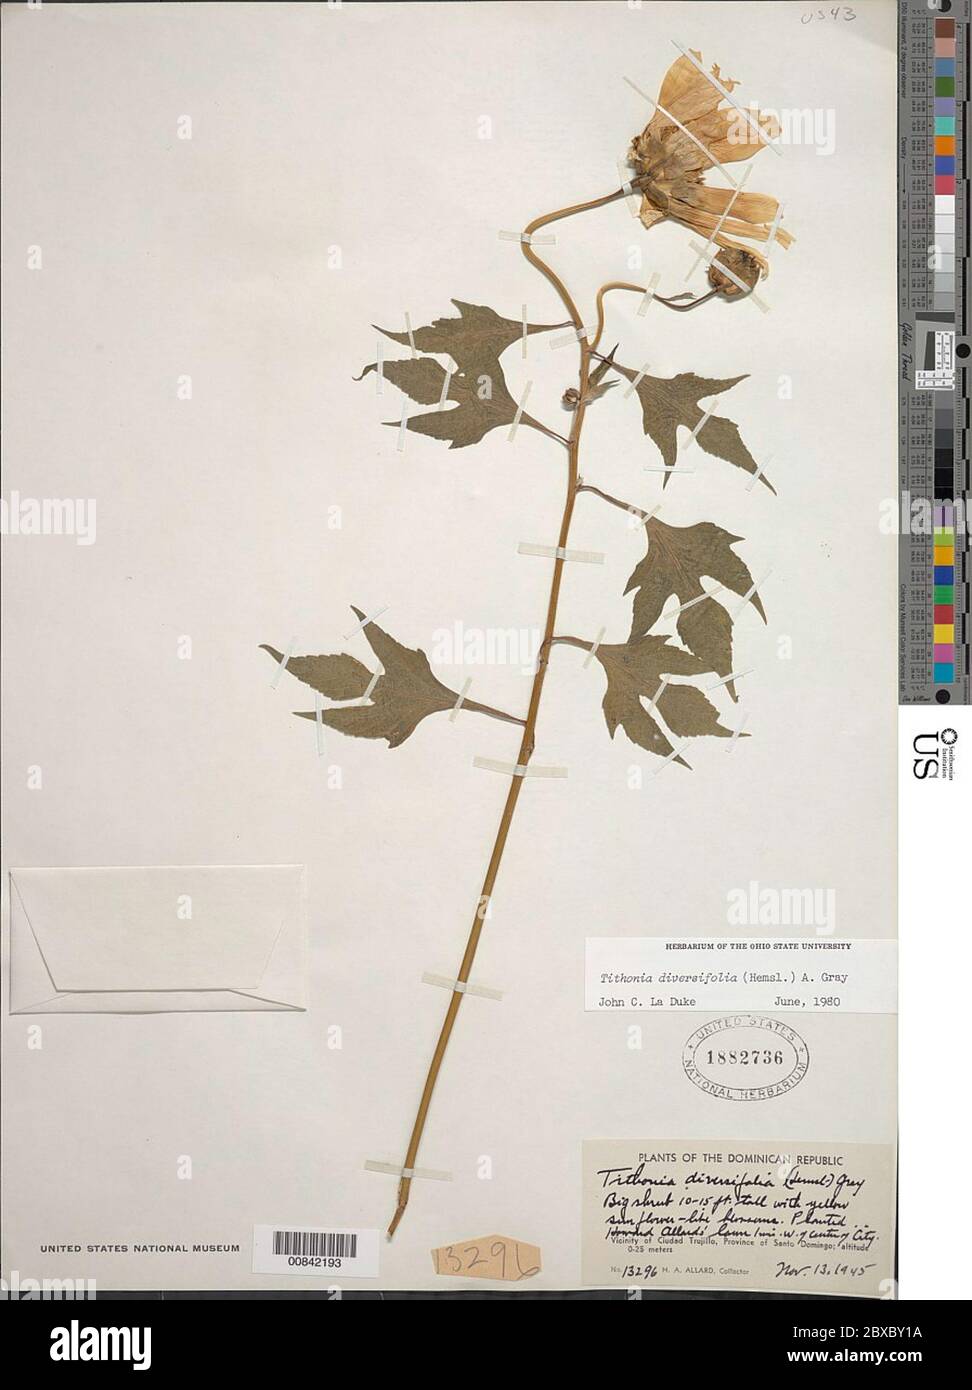 Tithonia diversifolia Hemsl A Gray Tithonia diversifolia Hemsl A Gray. Stock Photo